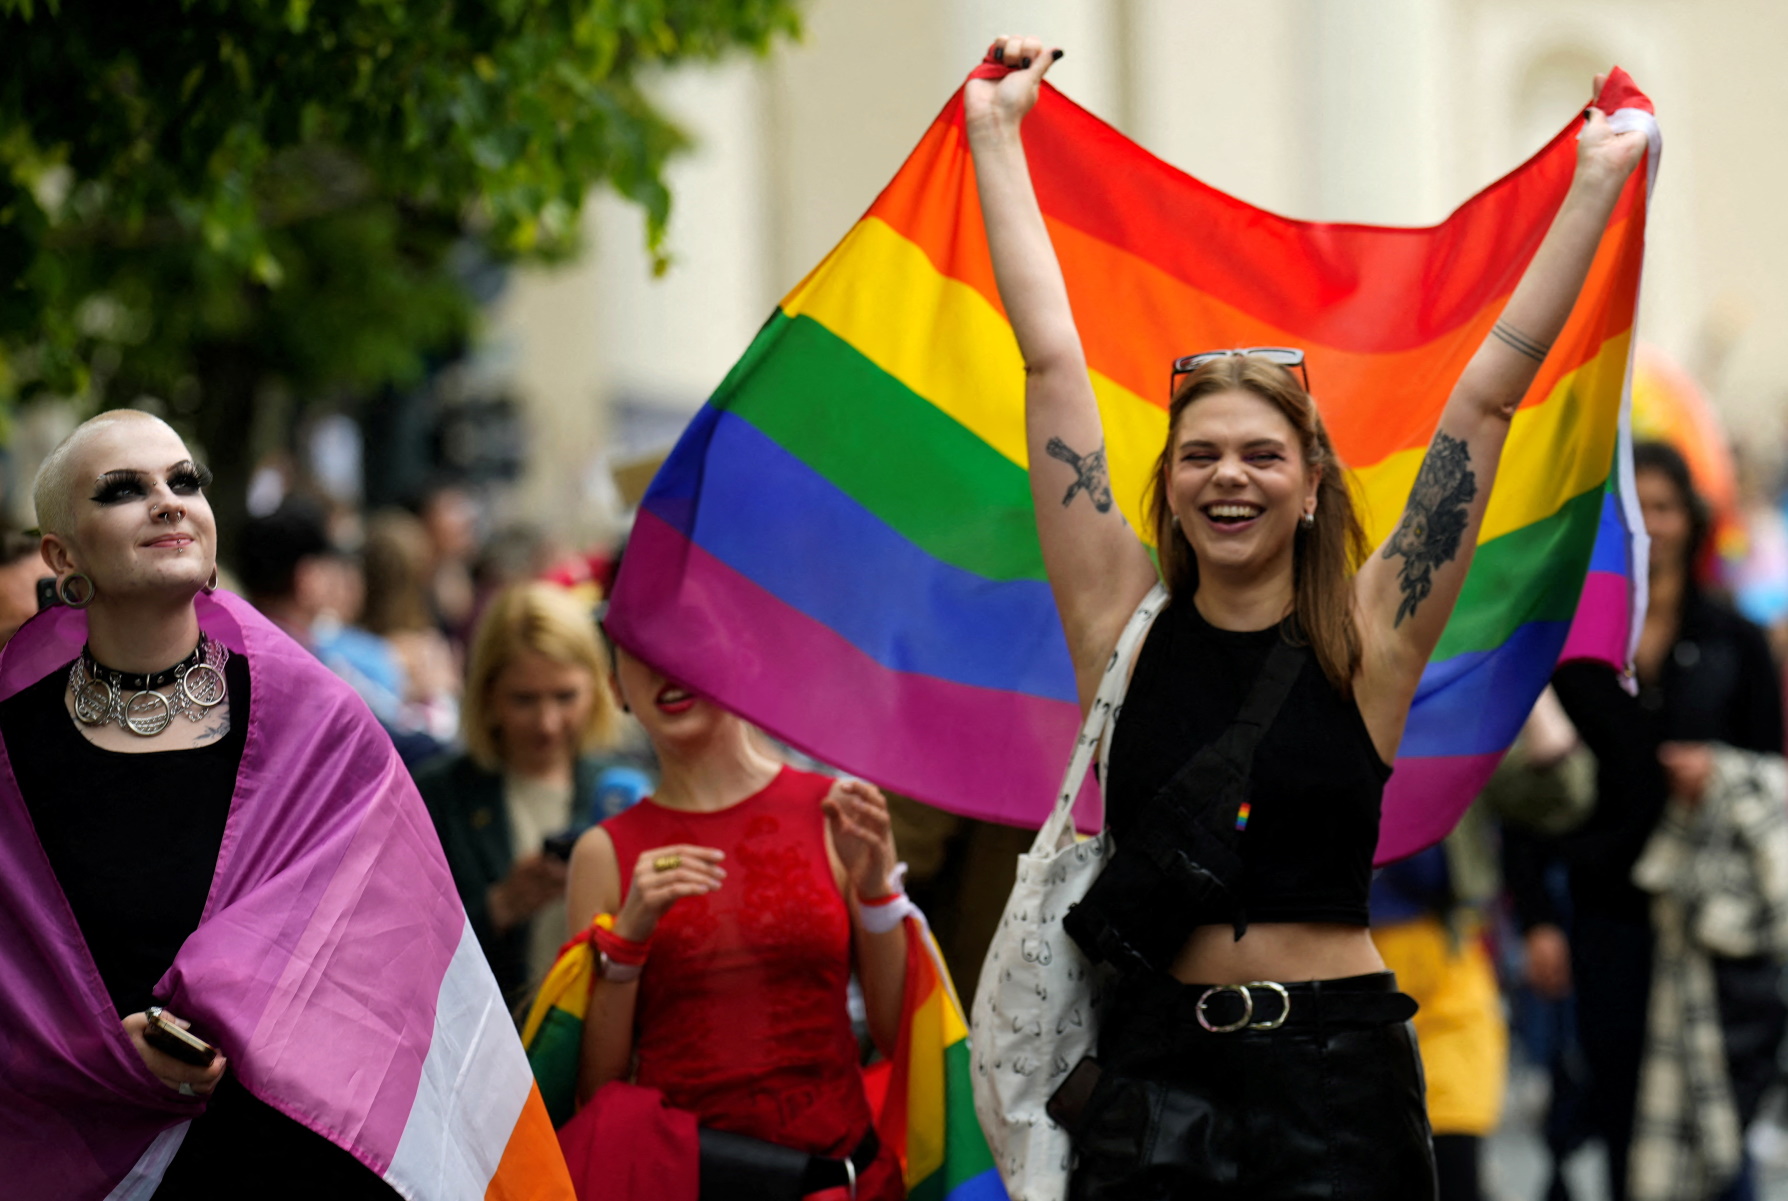 Bloomberg: Η Ελλάδα εντείνει τις προσπάθειες για την προώθηση των δικαιωμάτων της ΛΟΑΤΚΙ + κοινότητας